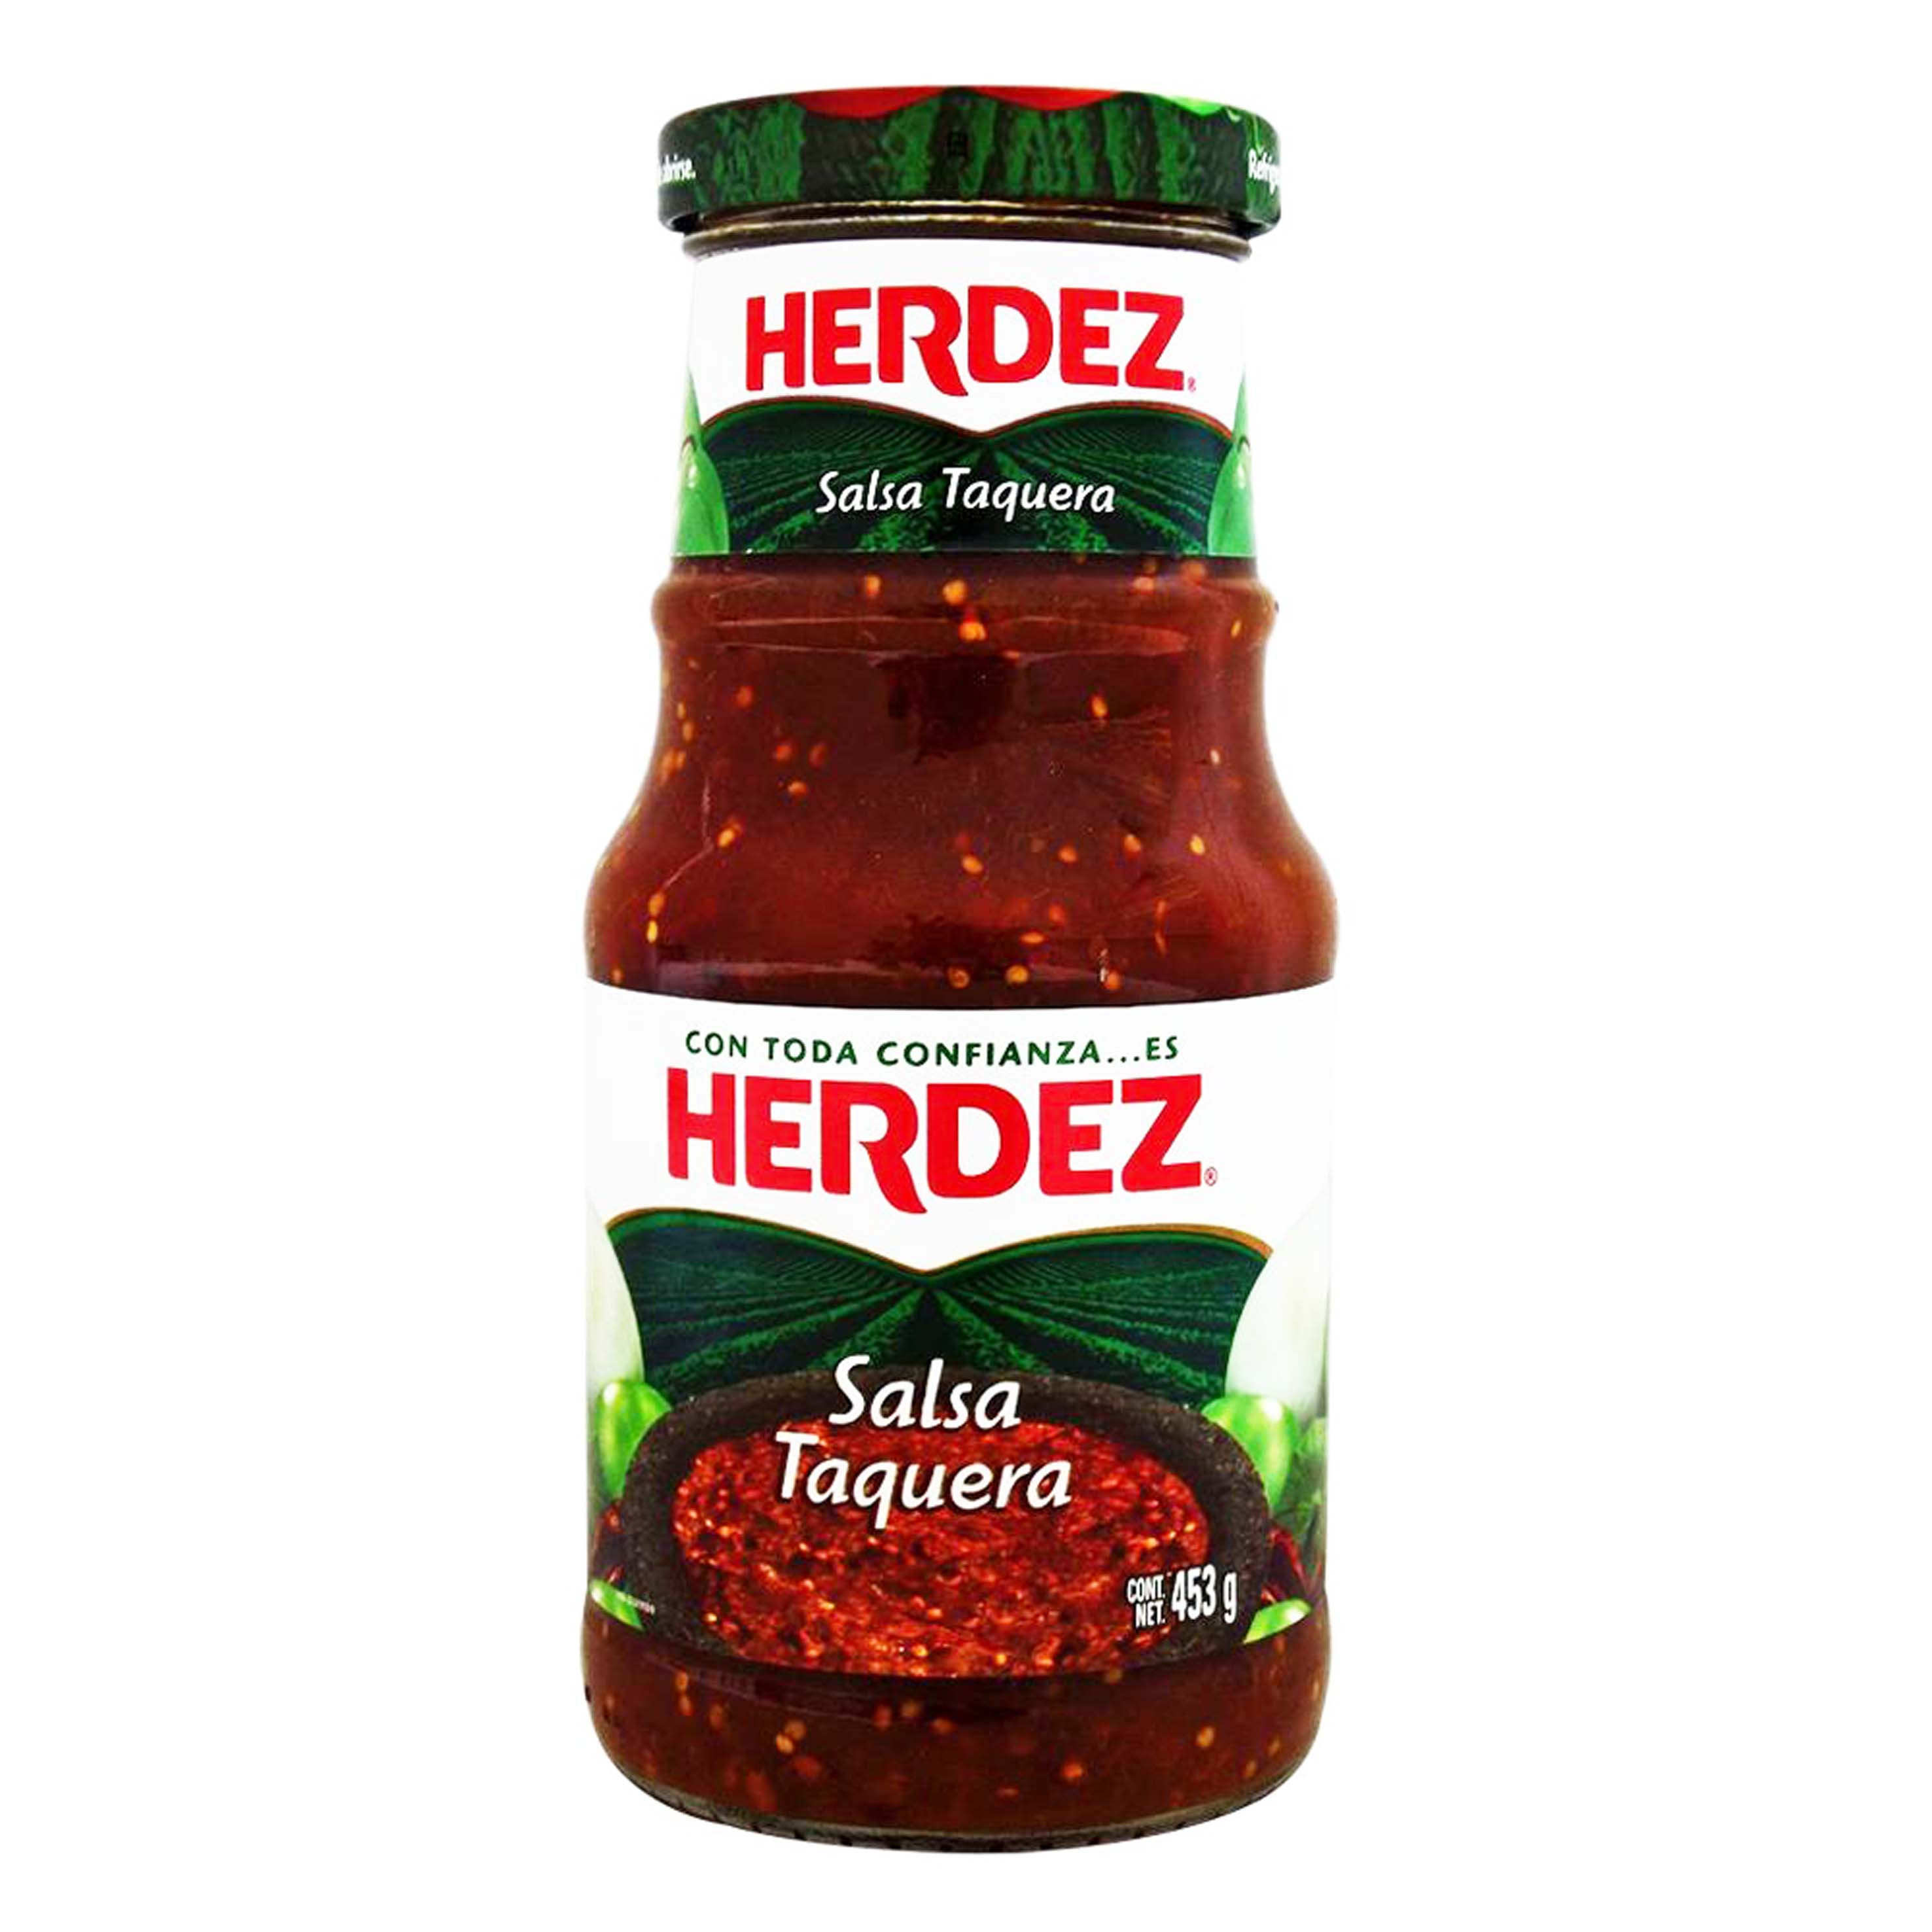 Herdez salsa taquera 12/453g tarro